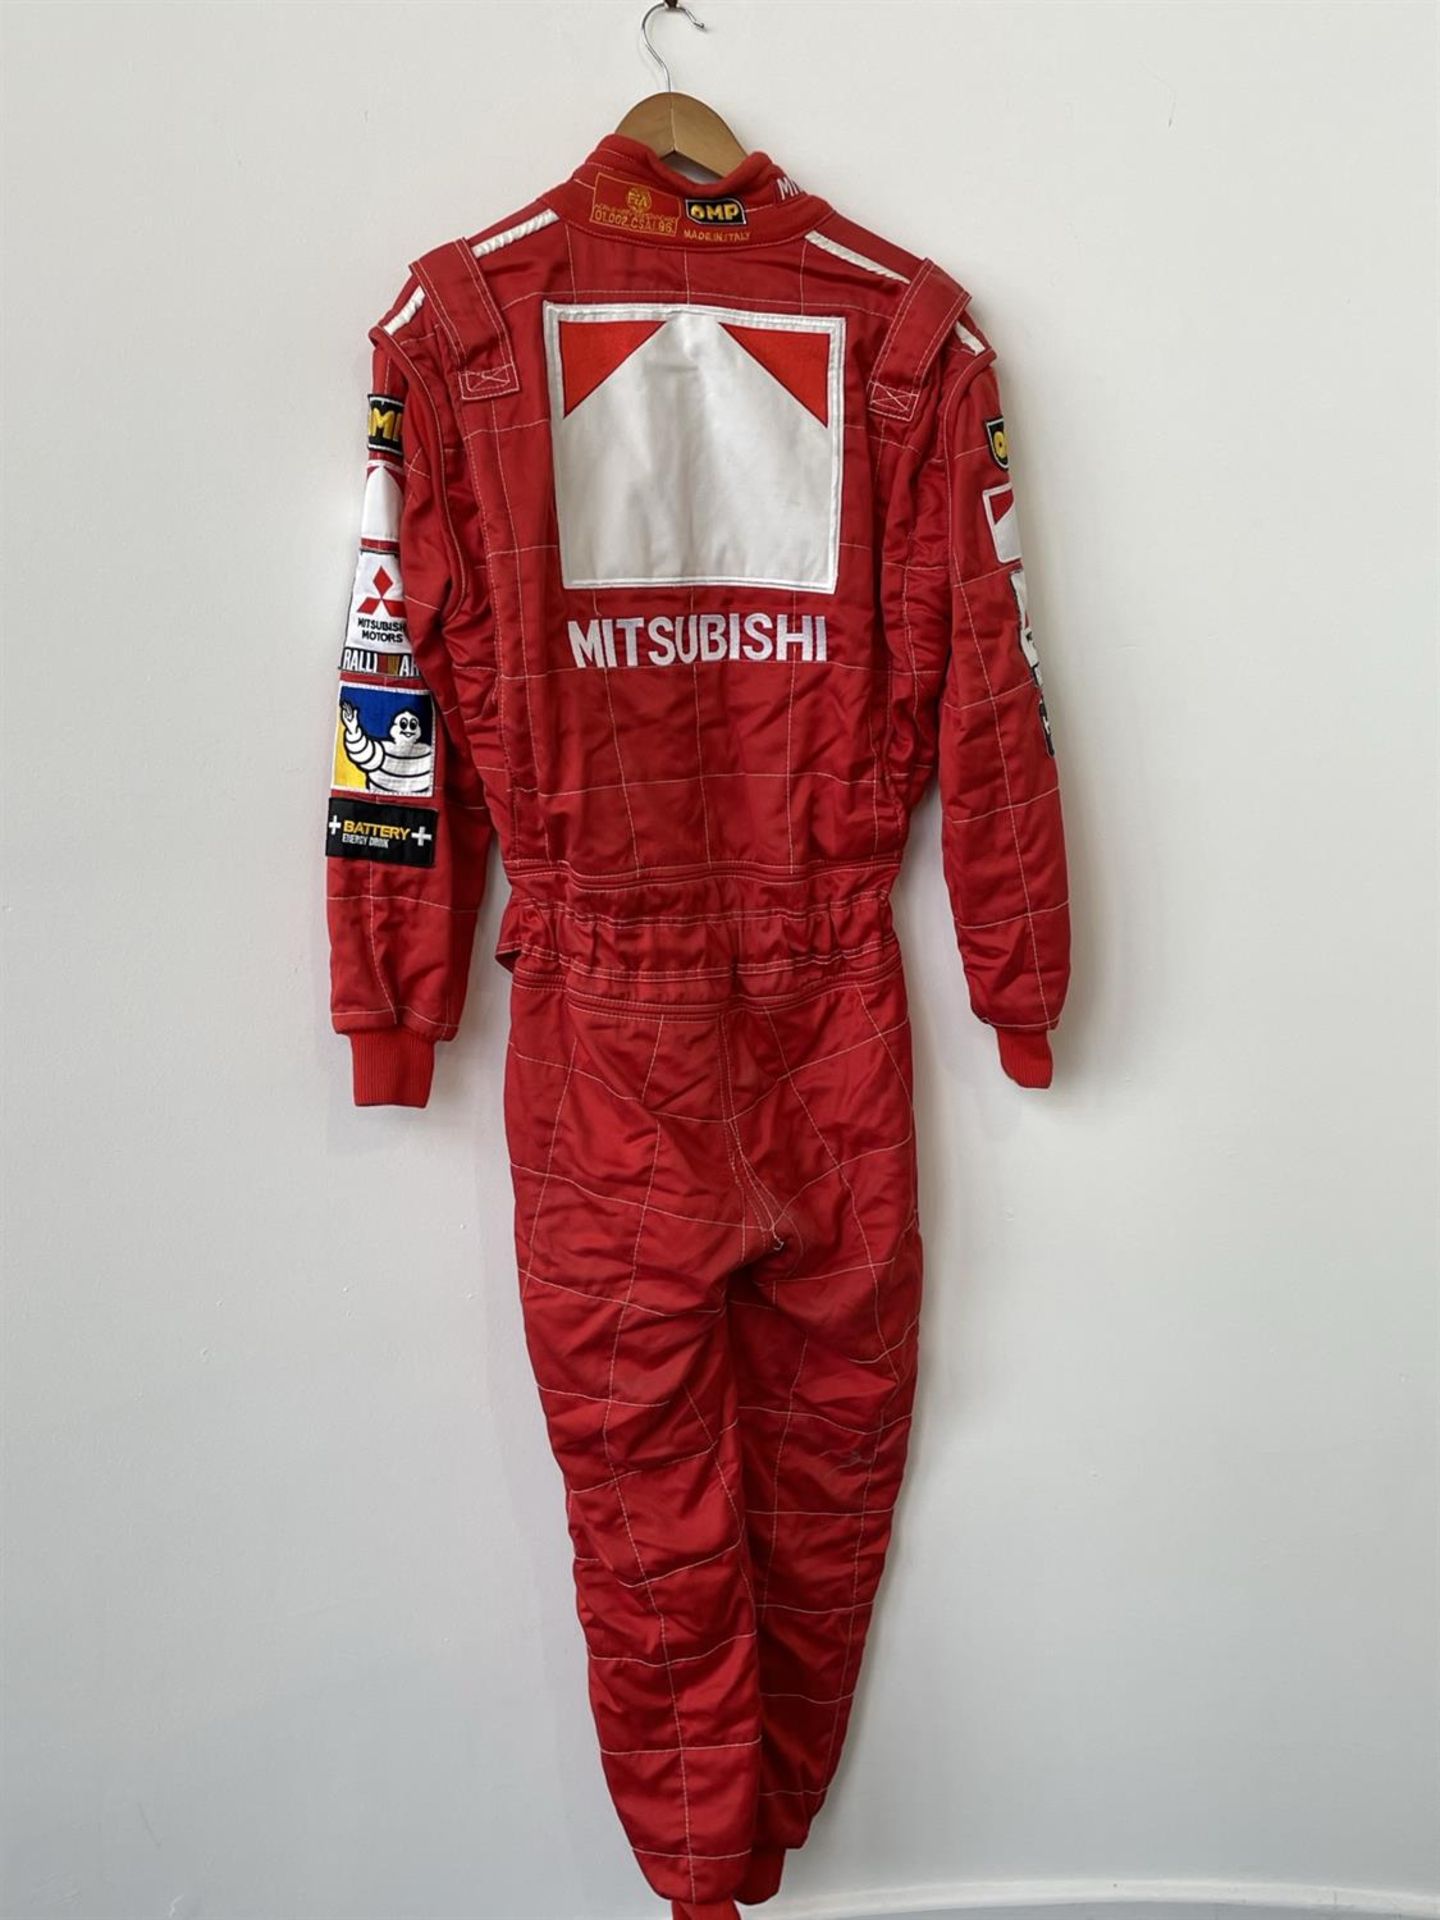 Tommi Makinen's Mitsubishi Race Suit - Image 4 of 6